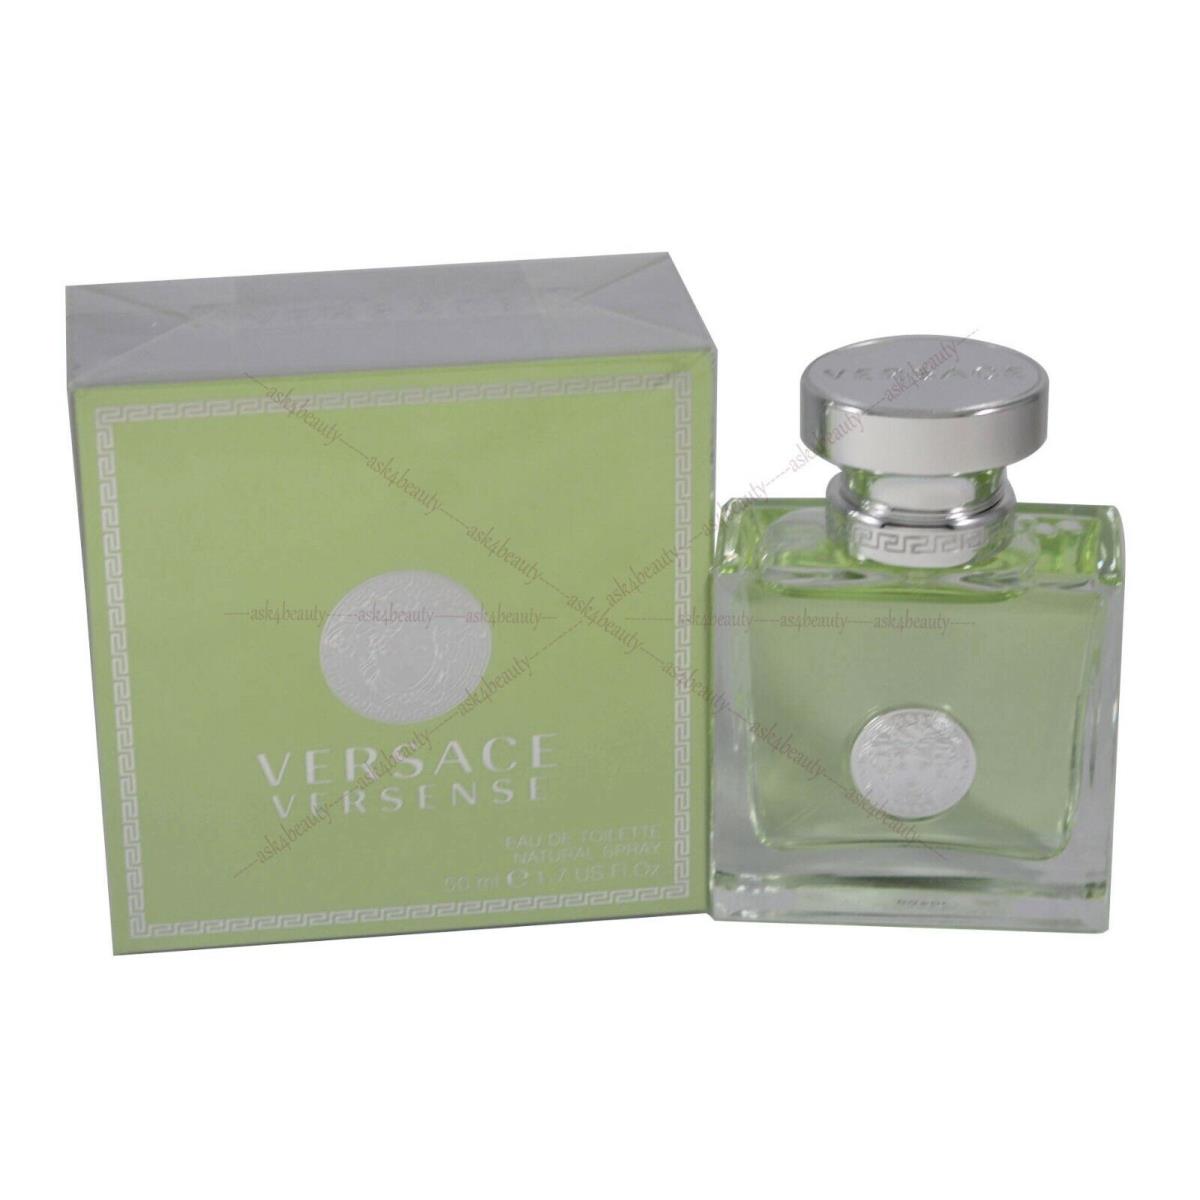 Versace Versense 1.7oz/50ml Edt Spray For Women By Versace